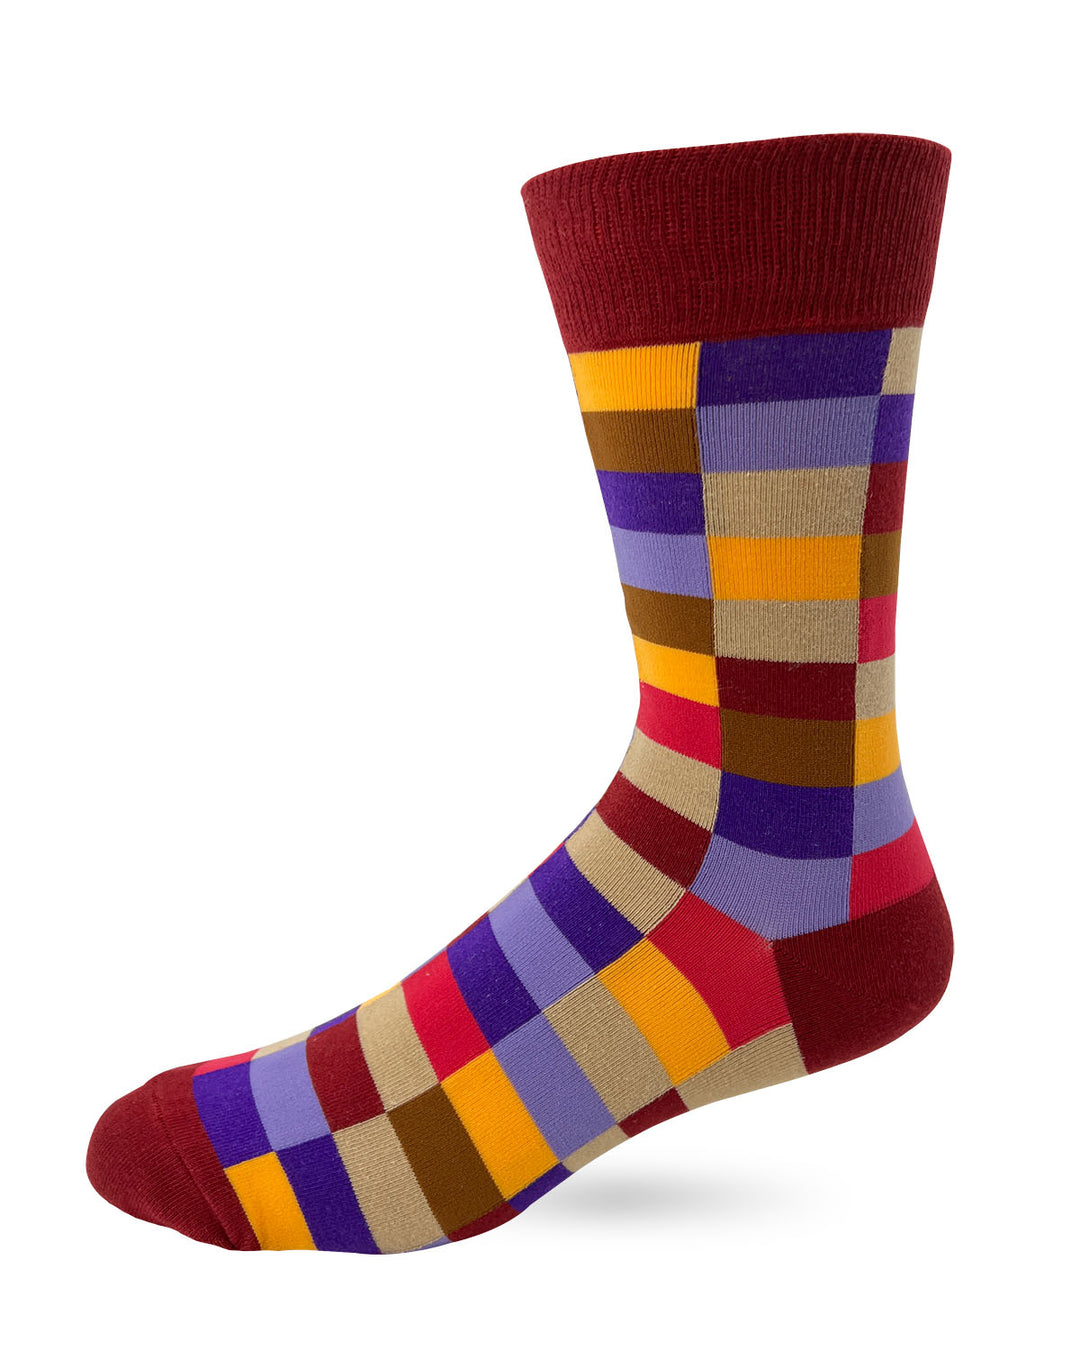 Colorful Grid Men's Novelty Crew Socks